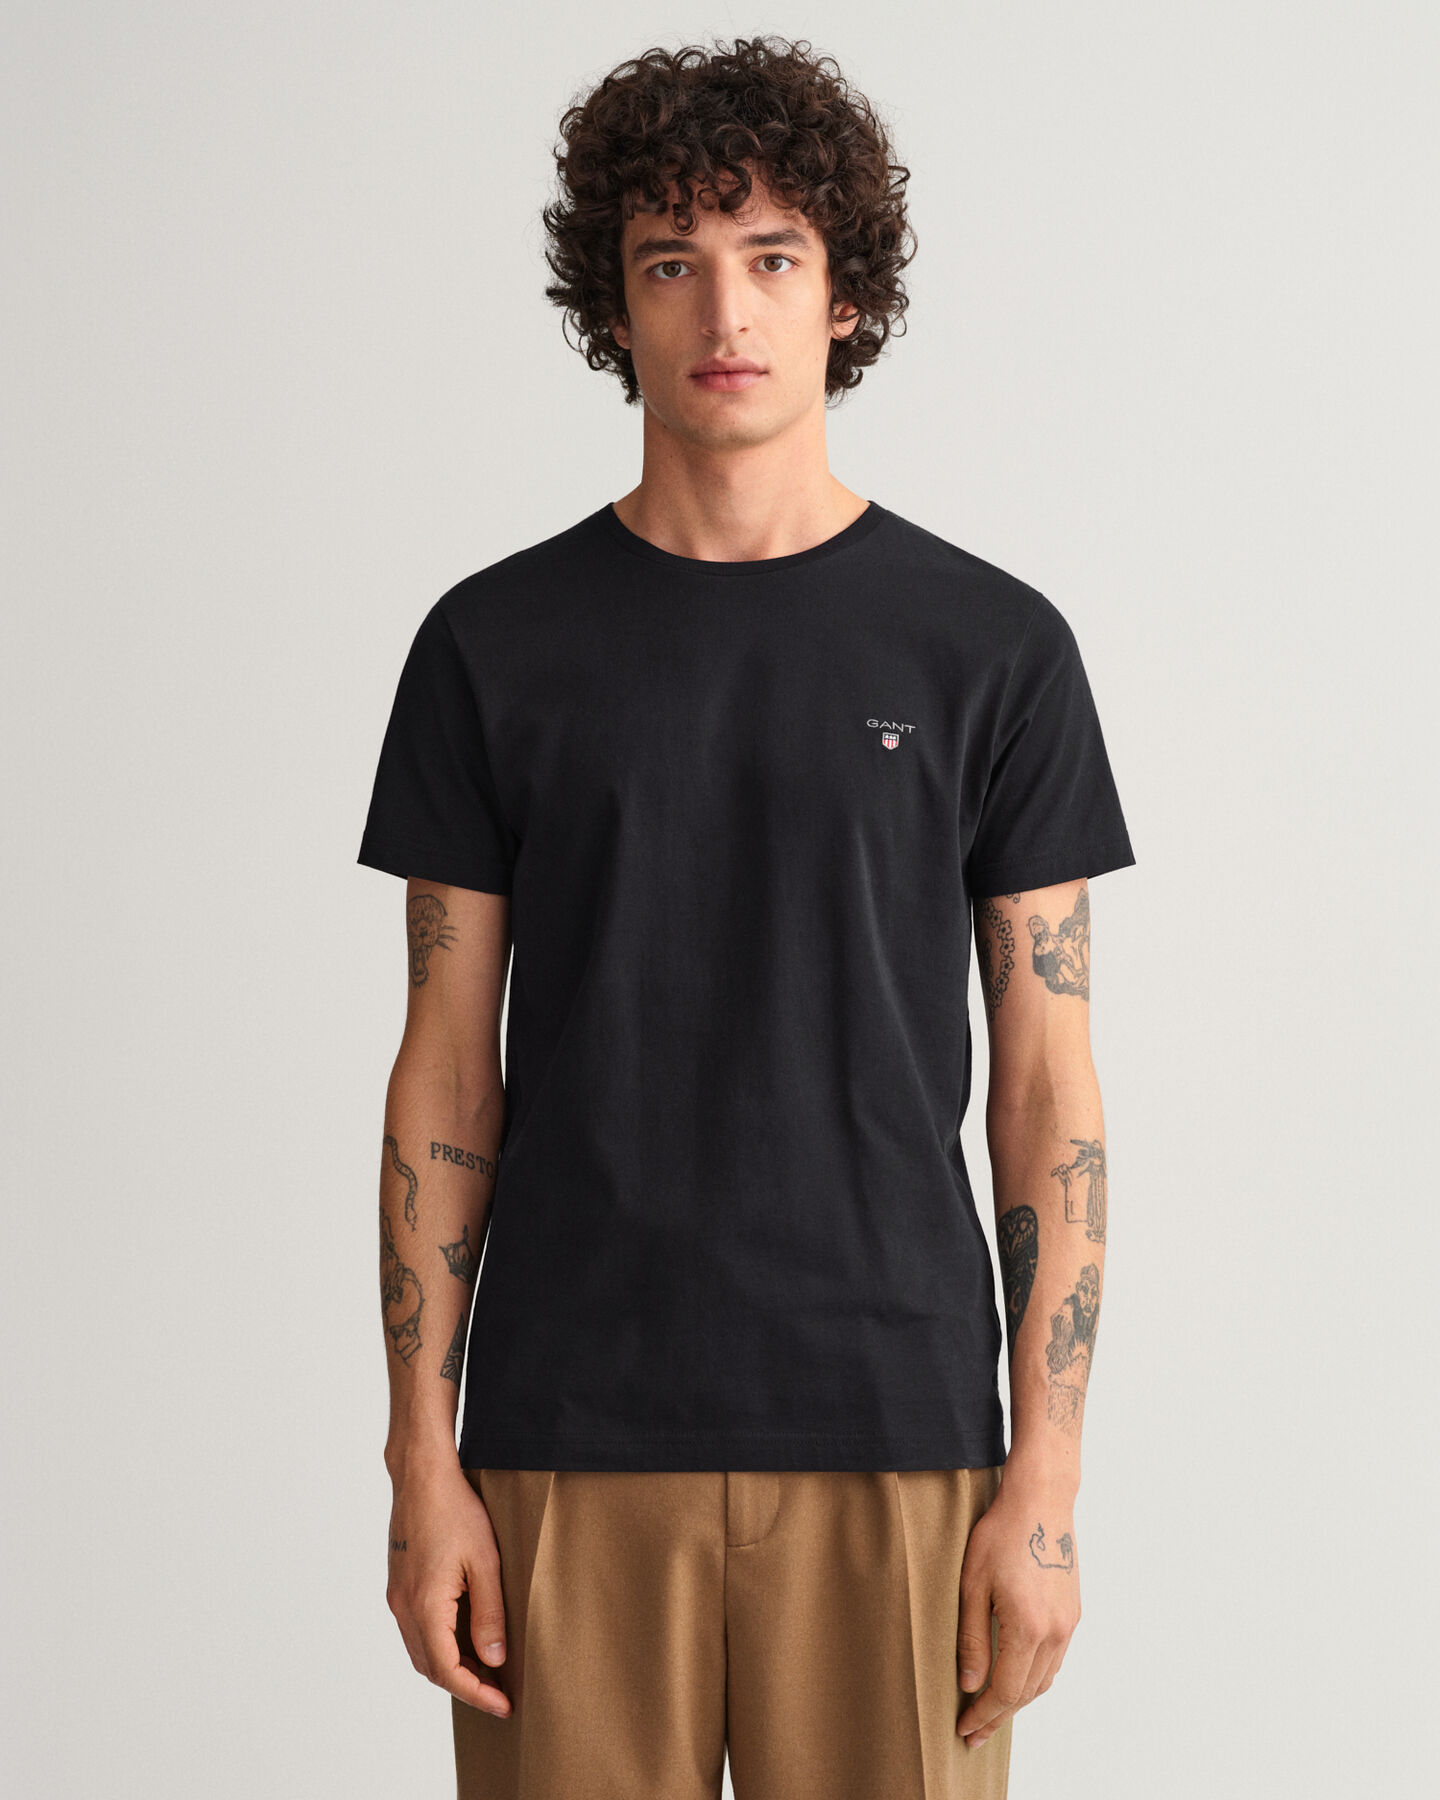 GANT Original T-Shirt - Slim Fit